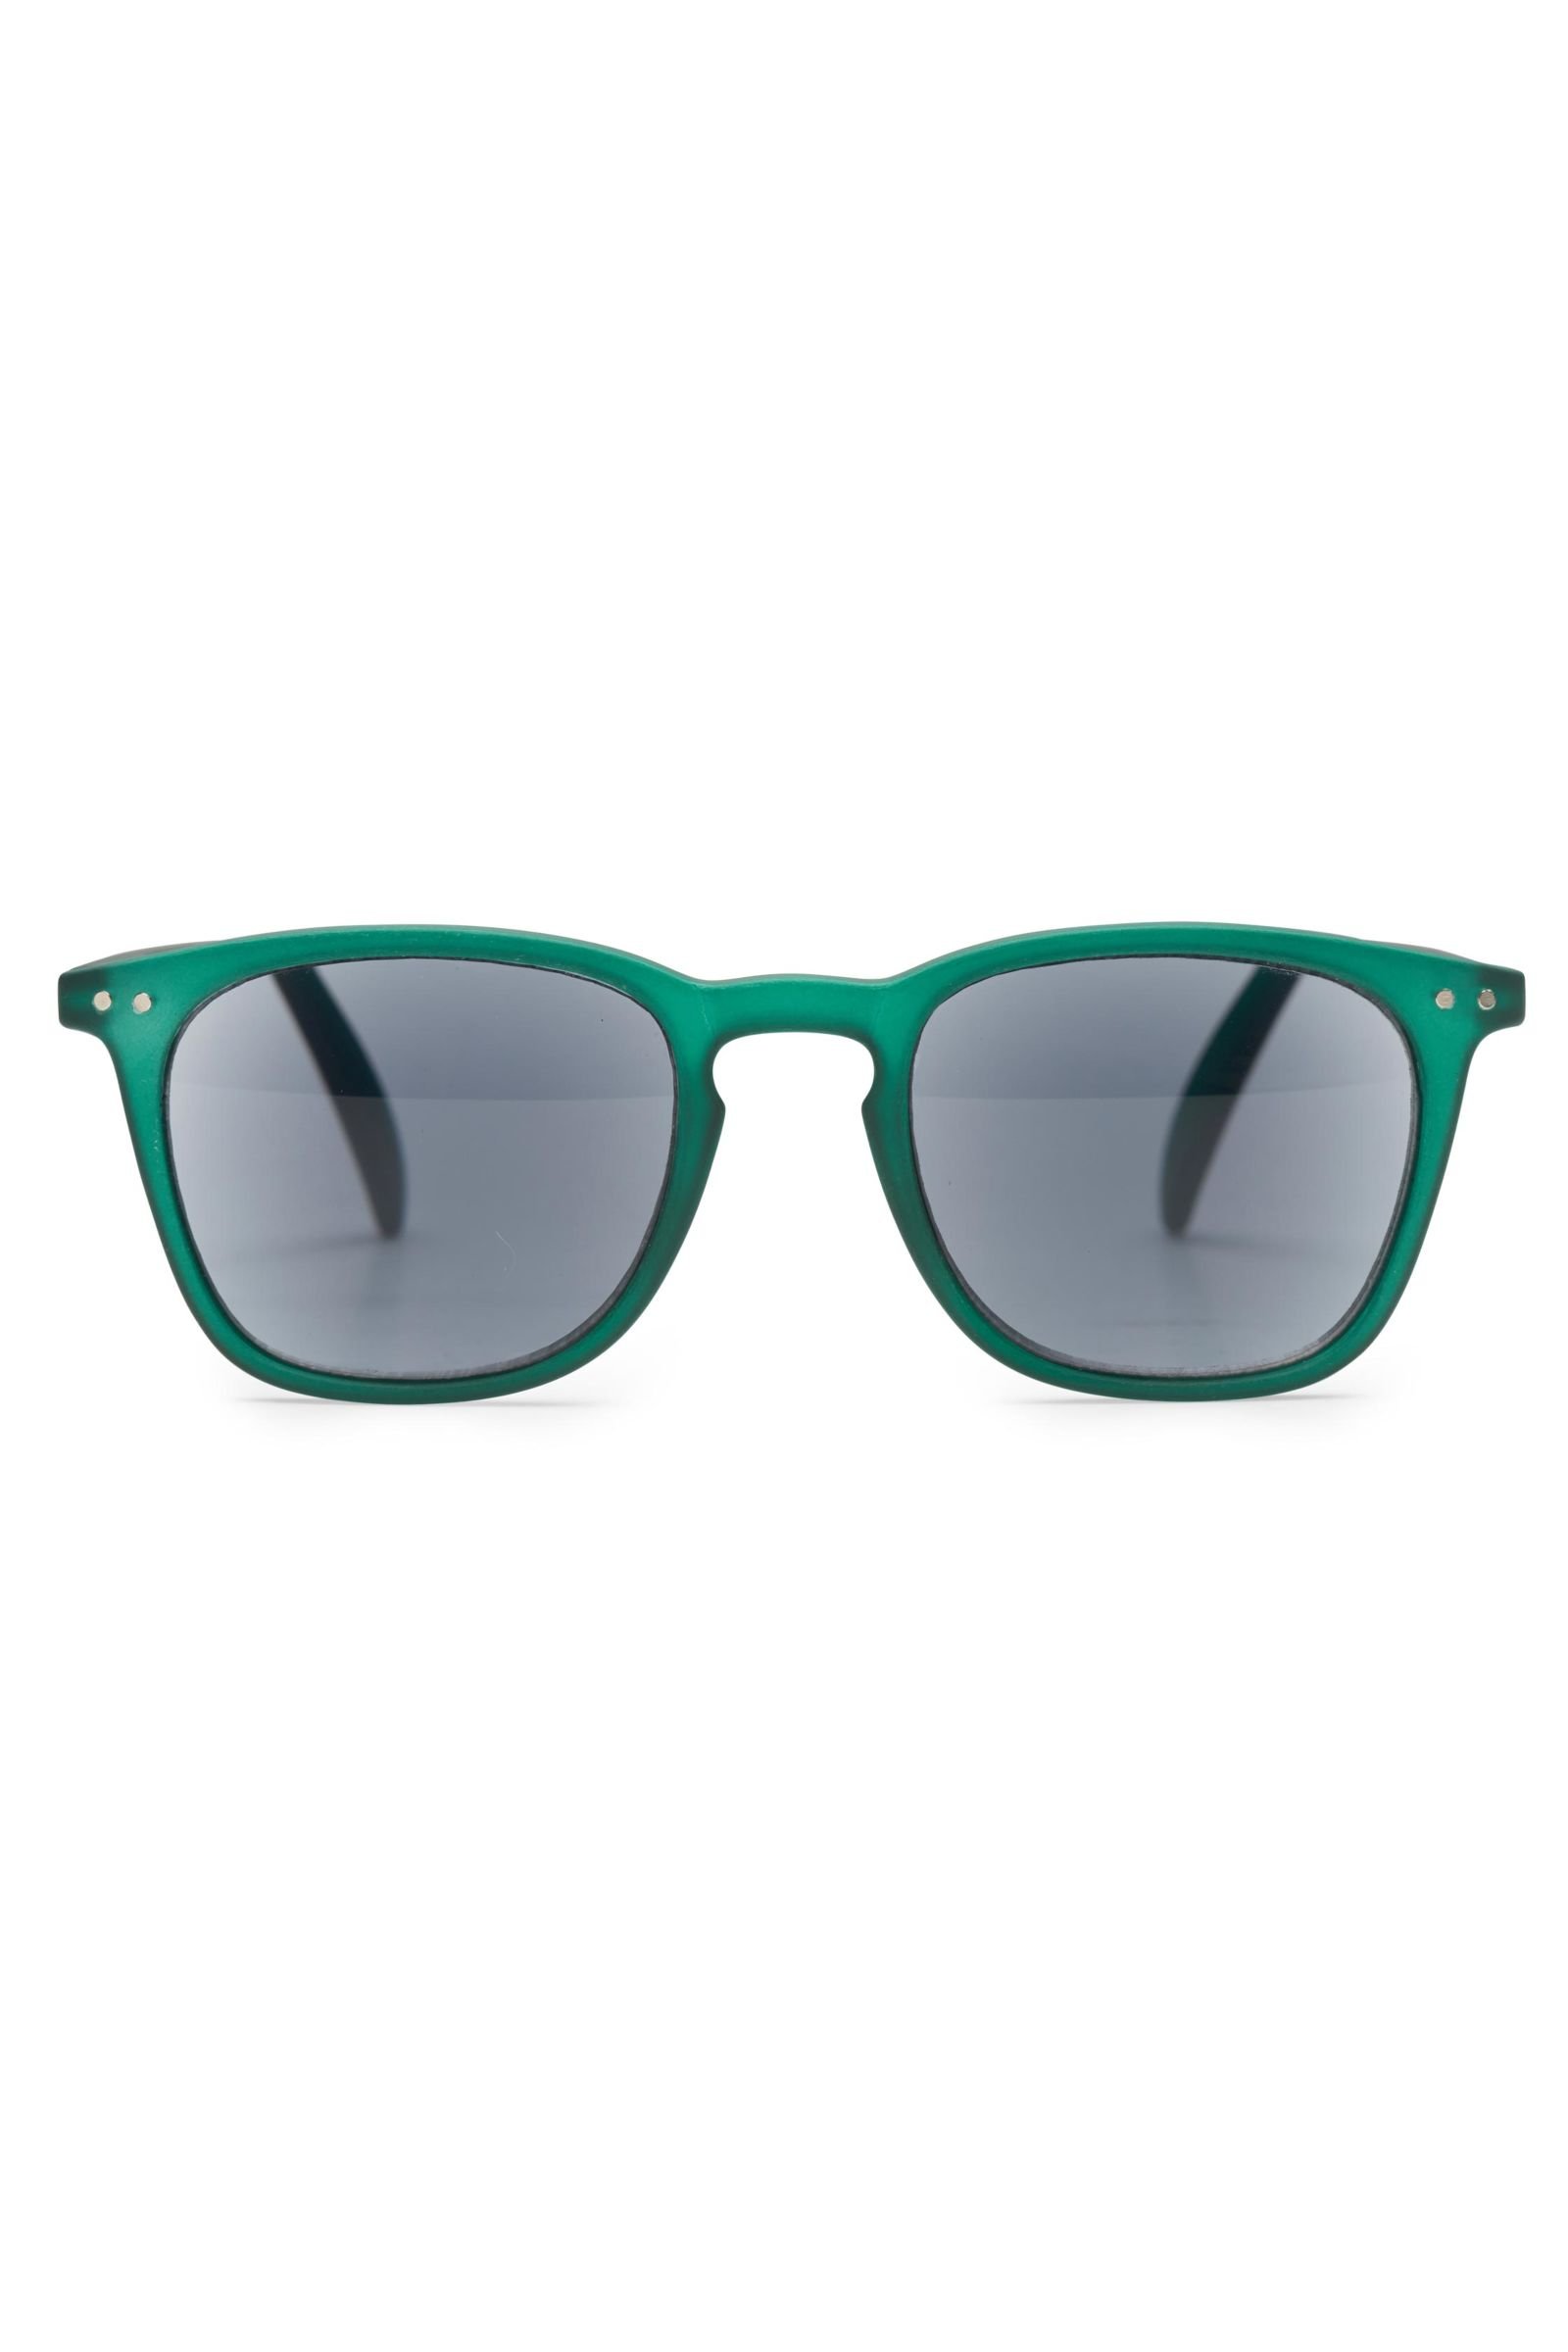 Sunglasses '#E Sun' dark green/grey